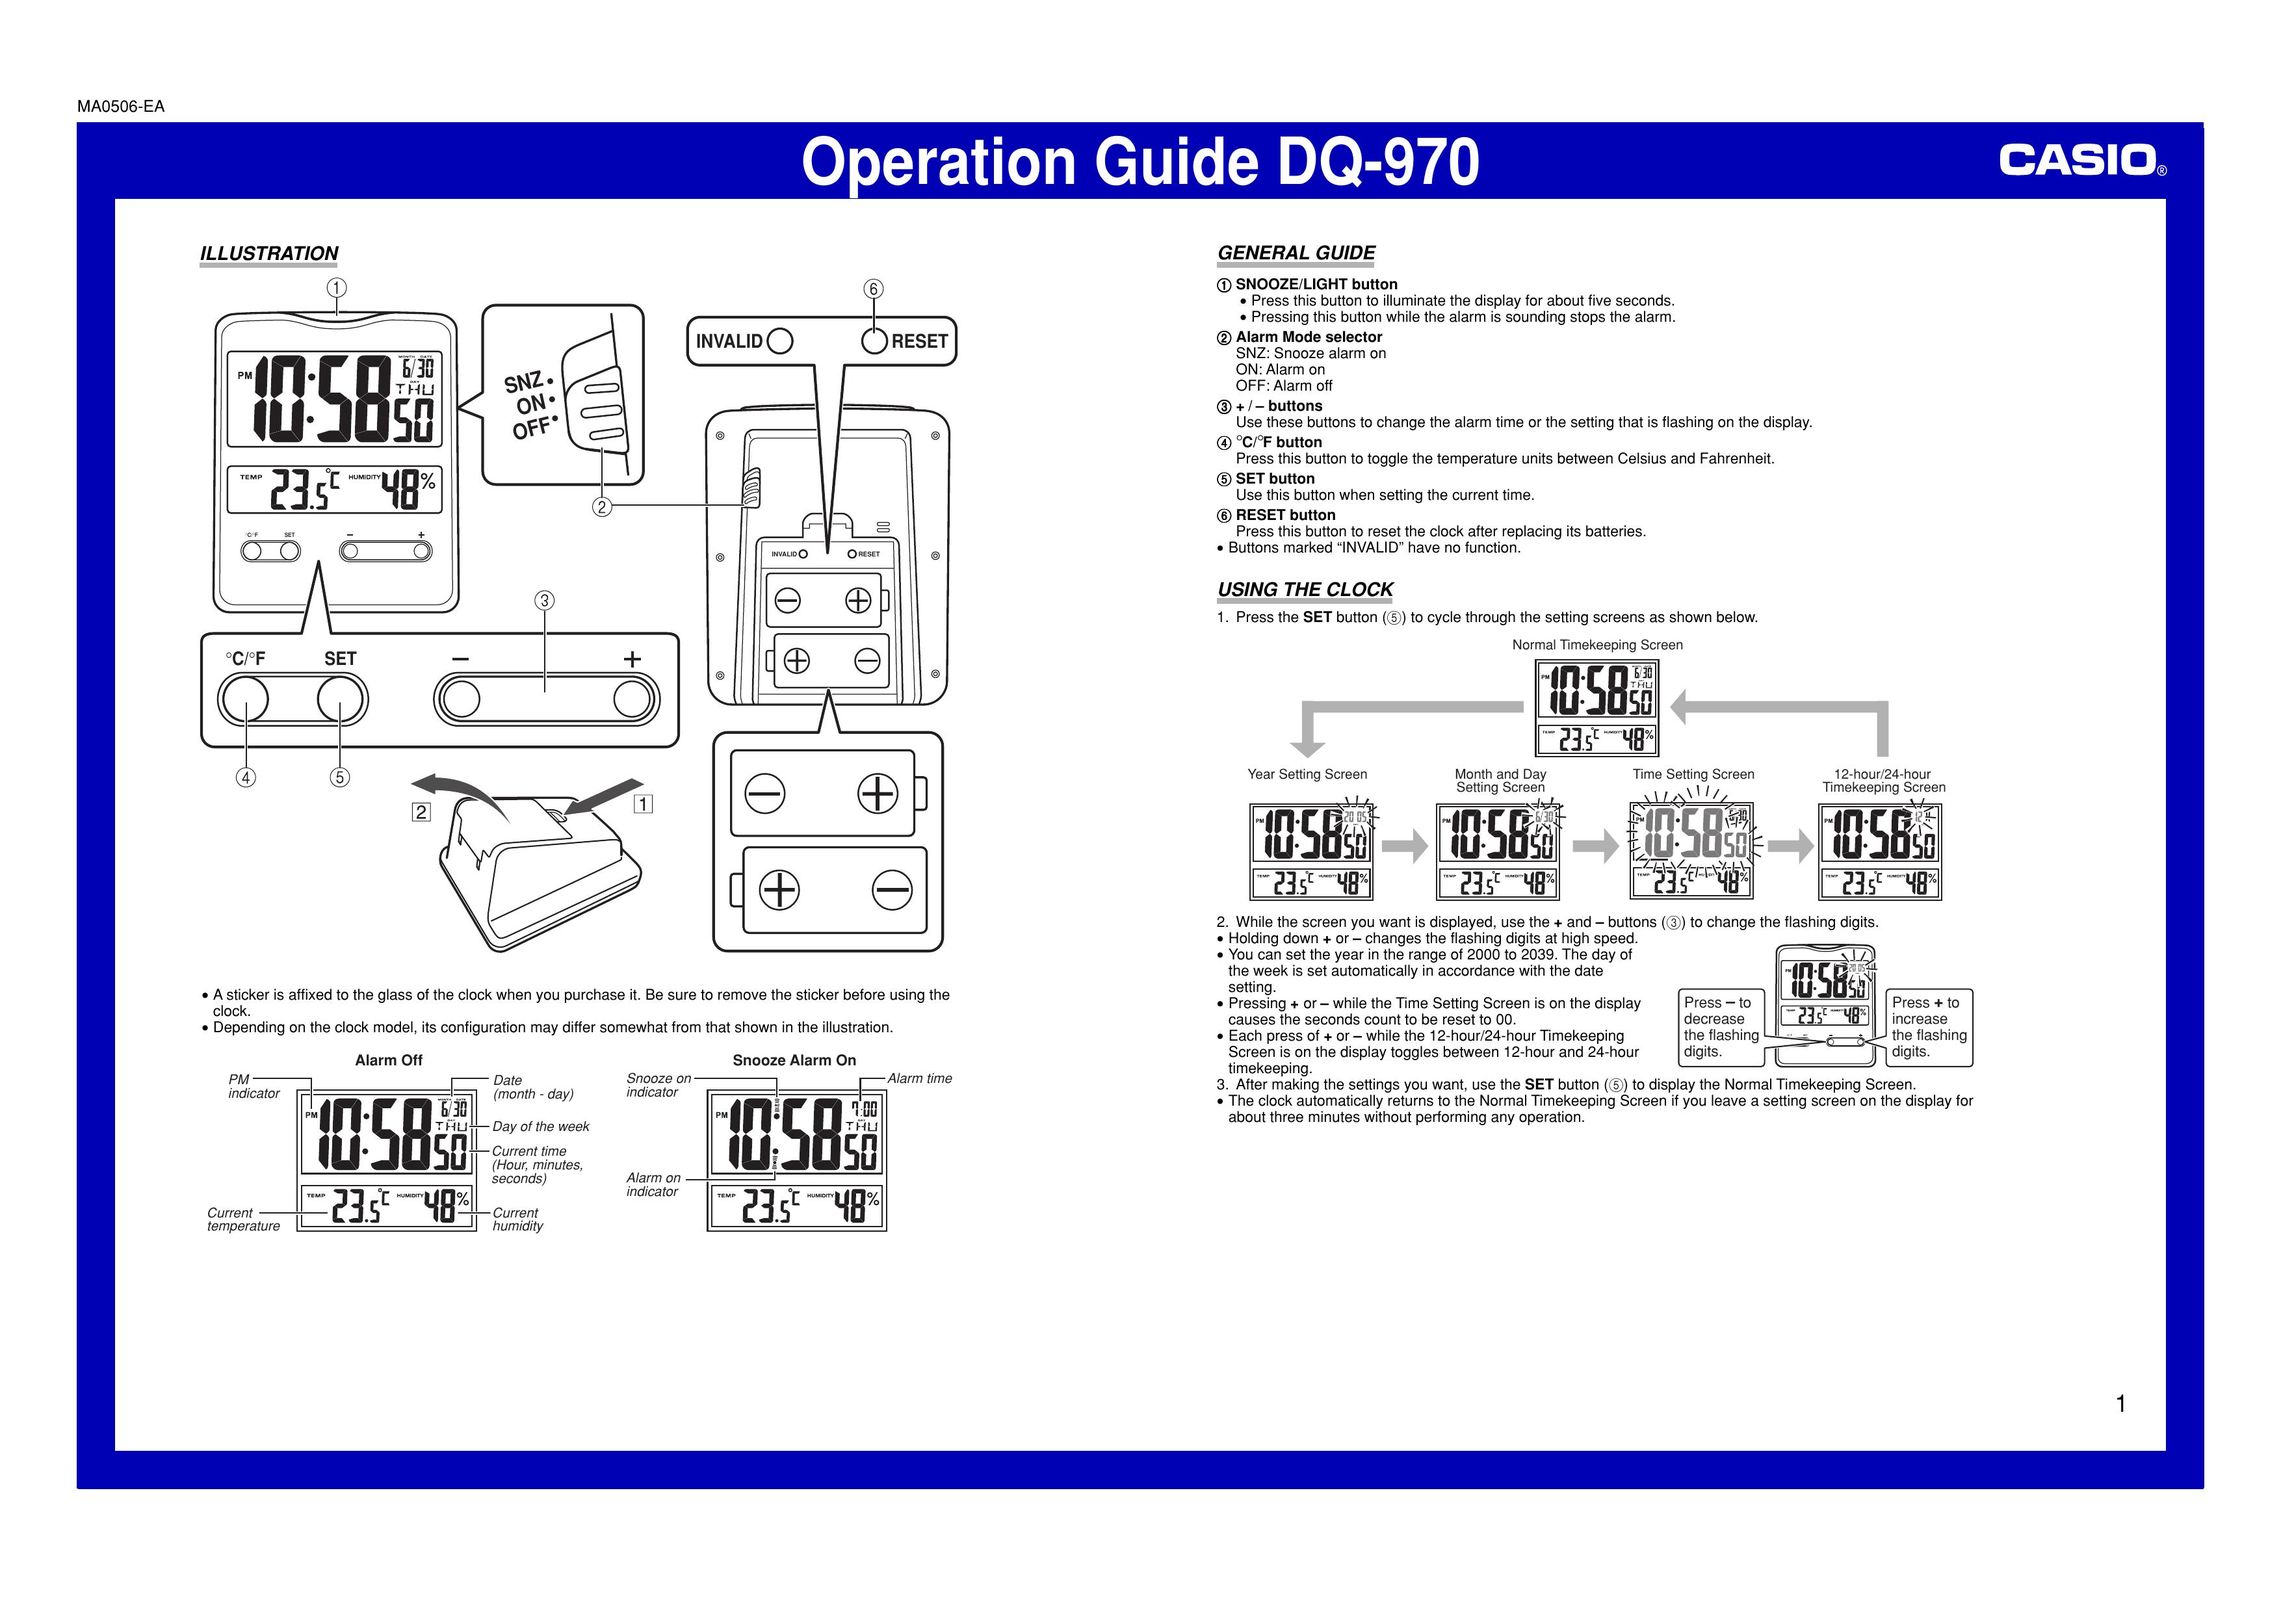 Casio DQ-970 Computer Hardware User Manual